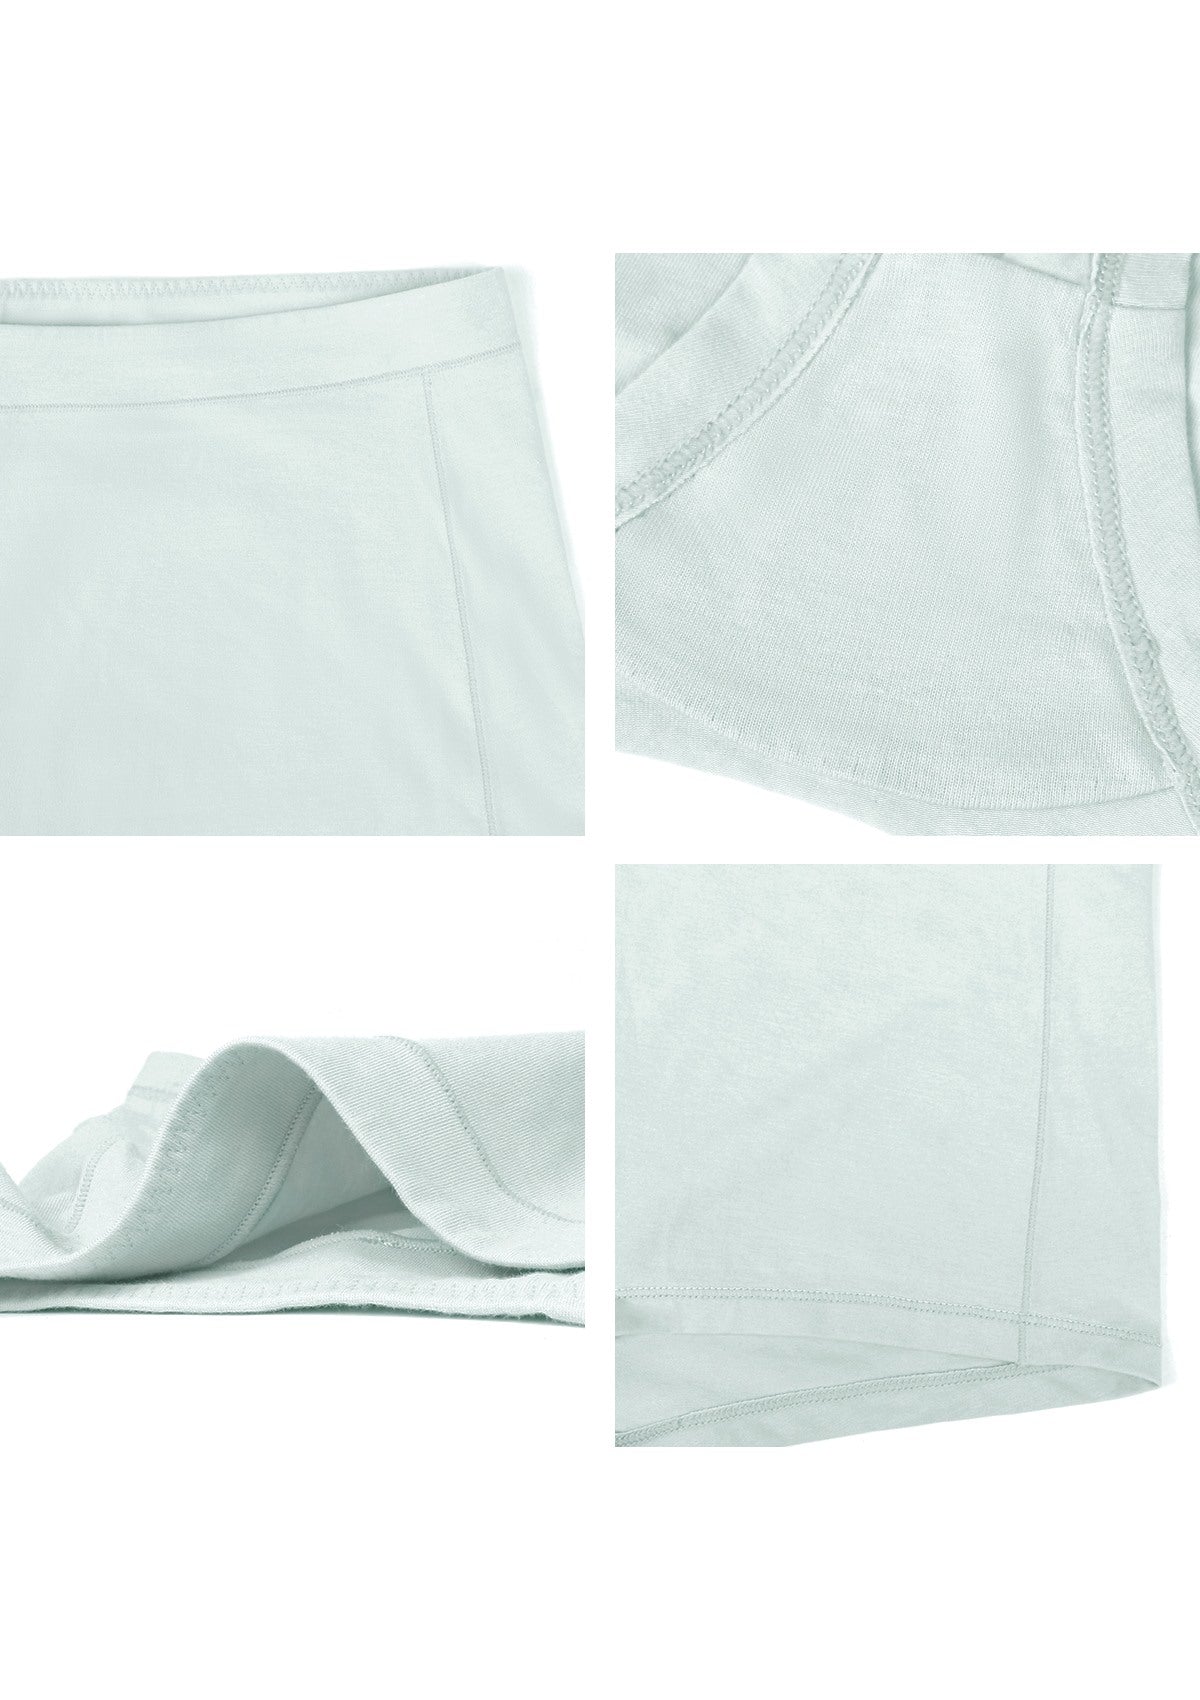 All-Day Comfort Mid-Rise Cotton Boyshorts Underwear 3 Pack - S / Black+Beige+Green